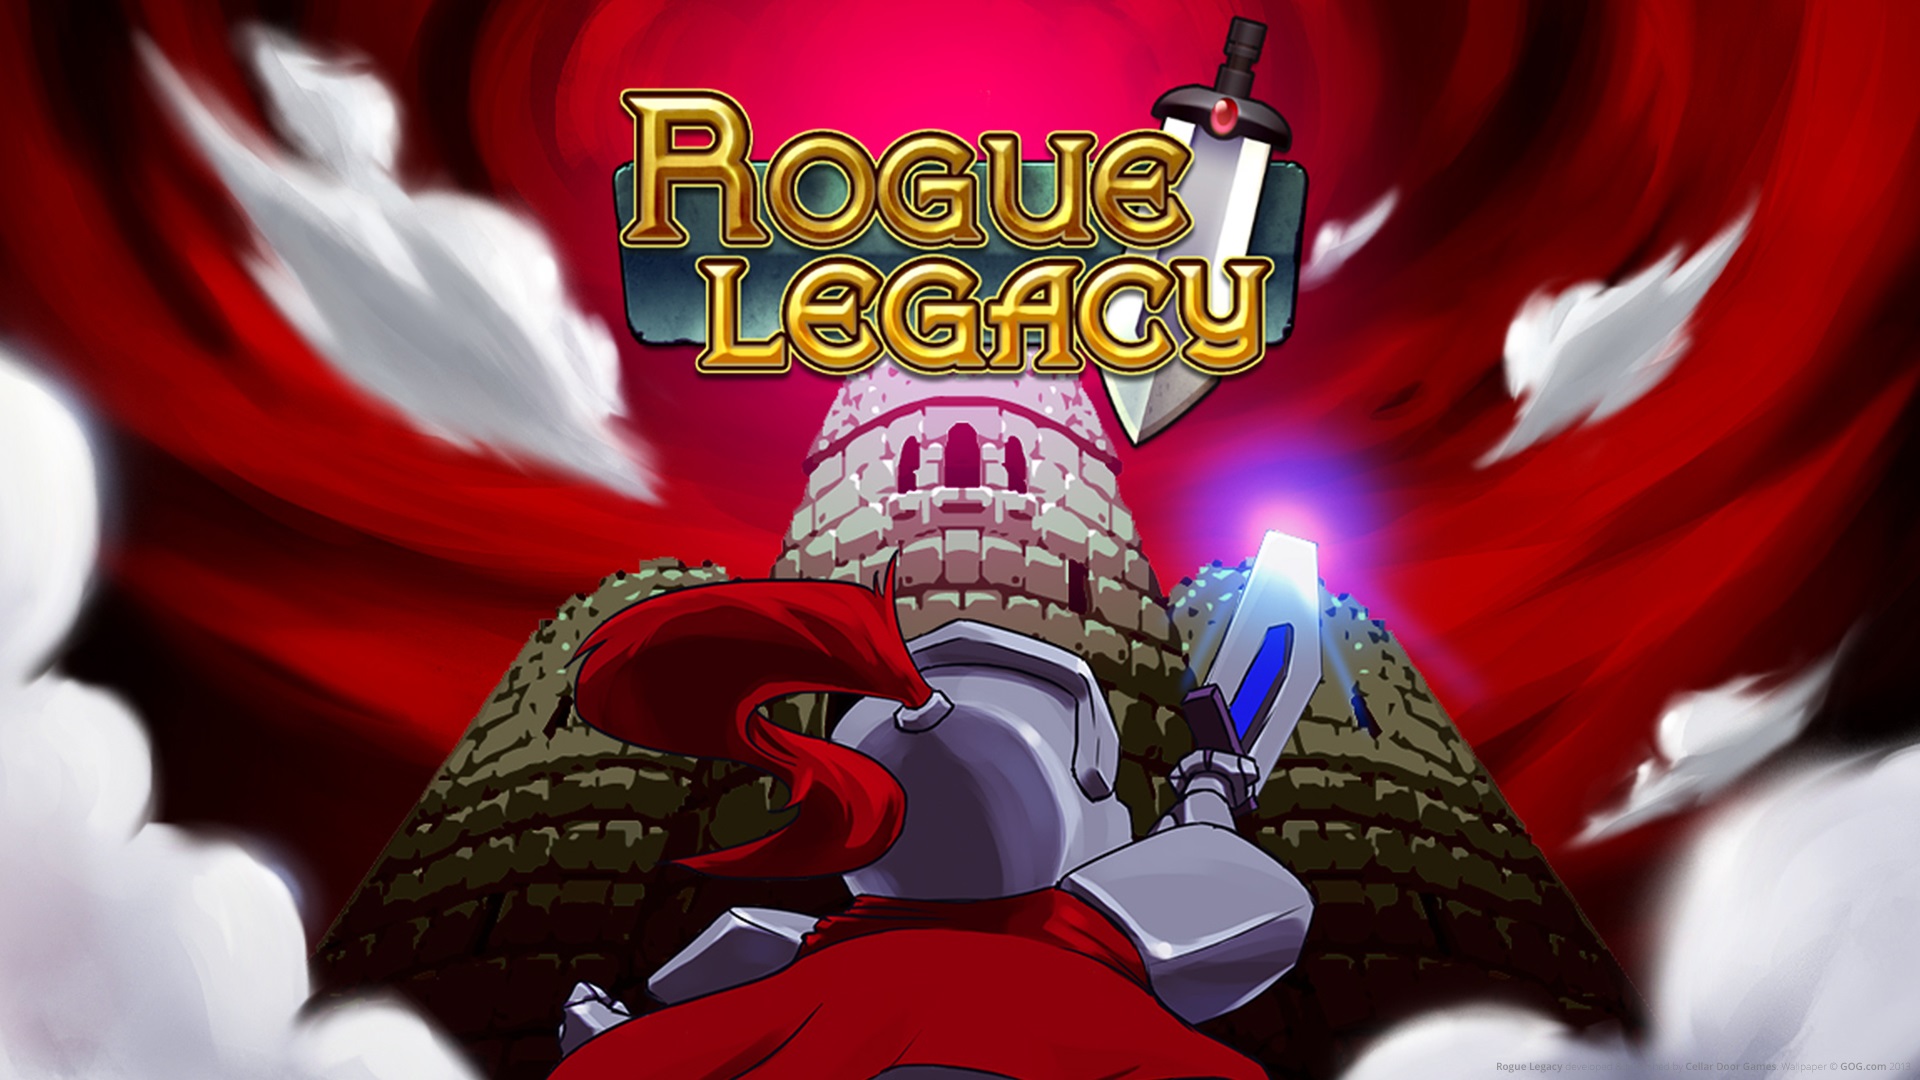 Rogue legacy